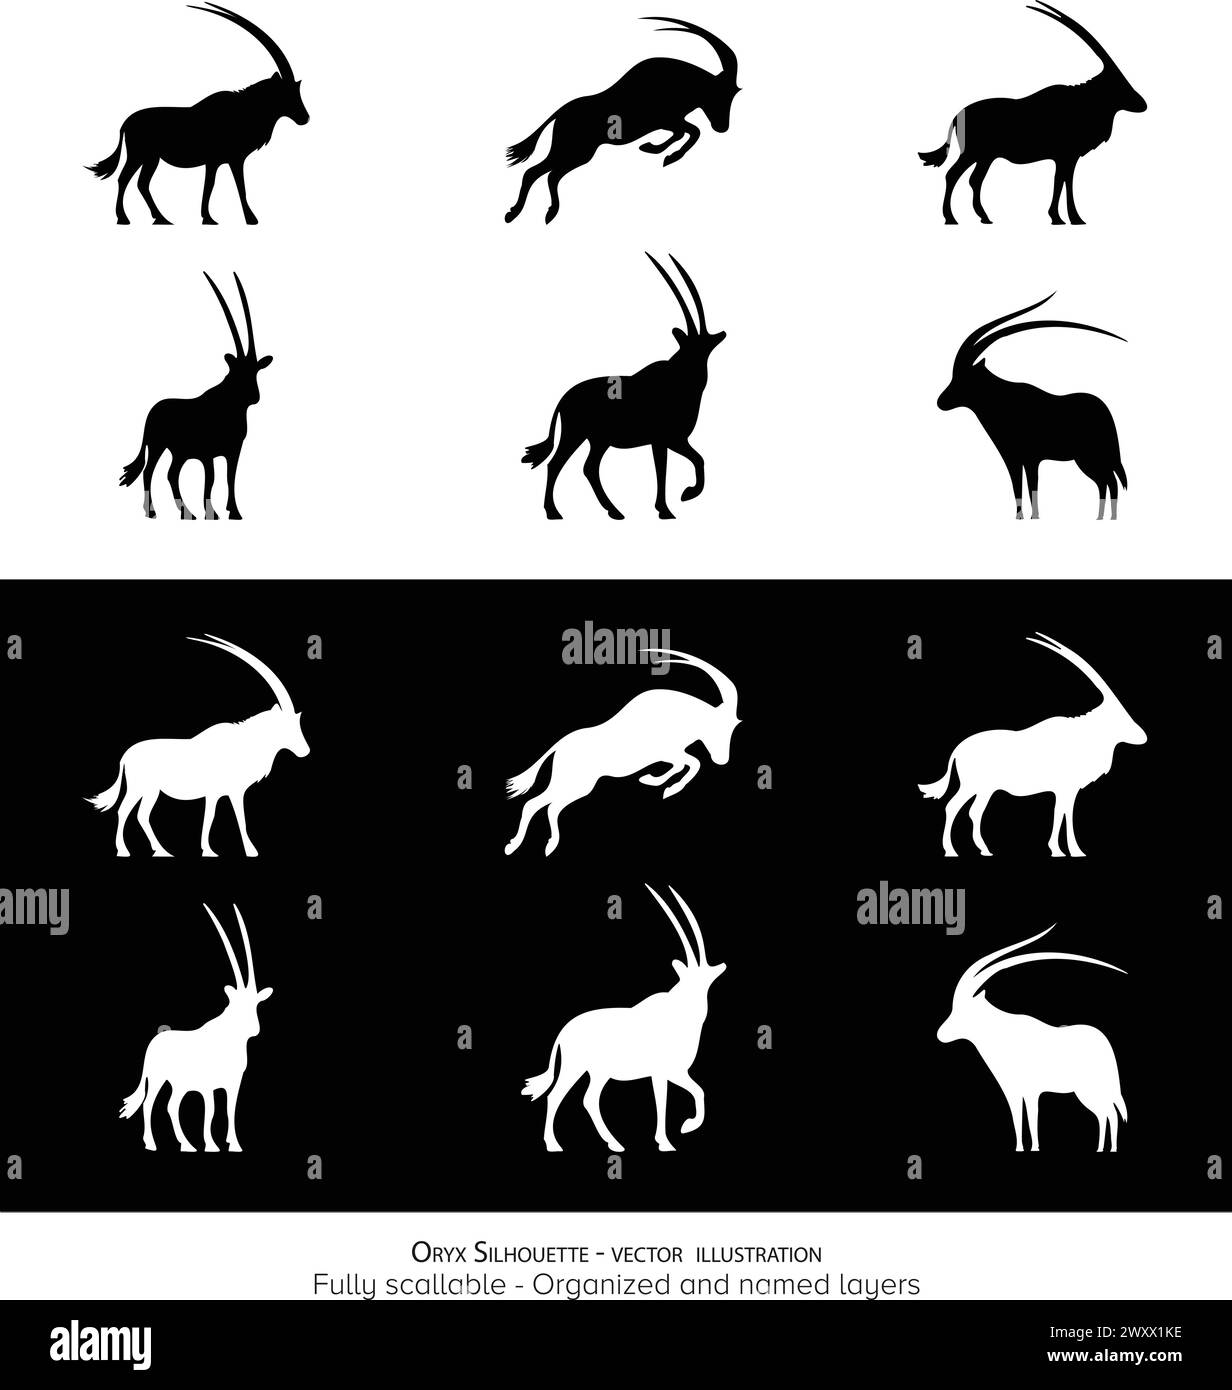 Iconic minimalistic Oryx Silhouette: National Animal pf Qatar, Namibia, Jordan, and Oman. Vector illustration. Stock Vector